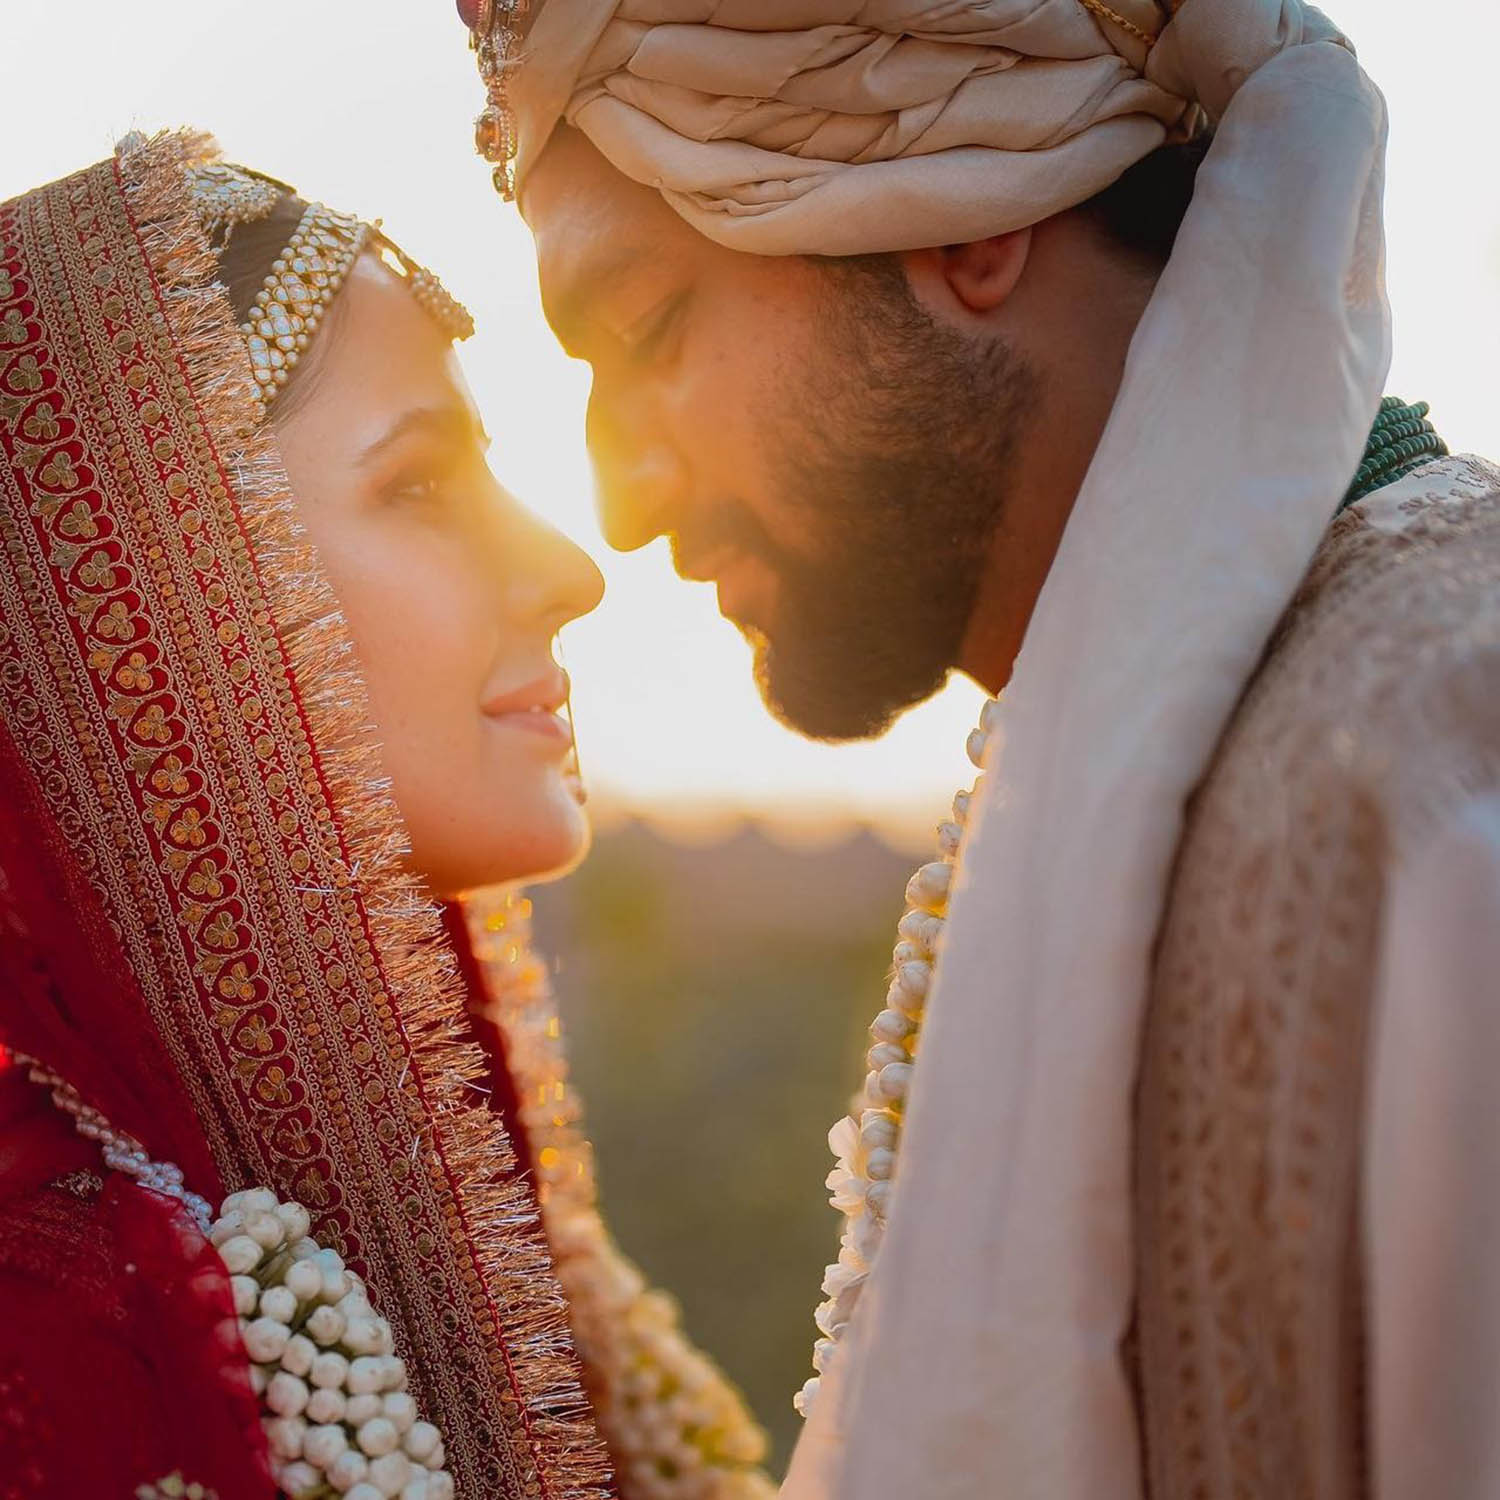 https://onlookersmedia.in/wp-content/uploads/2021/12/vicky-kaushal-katrina-kaif-wedding-photos-5.jpg